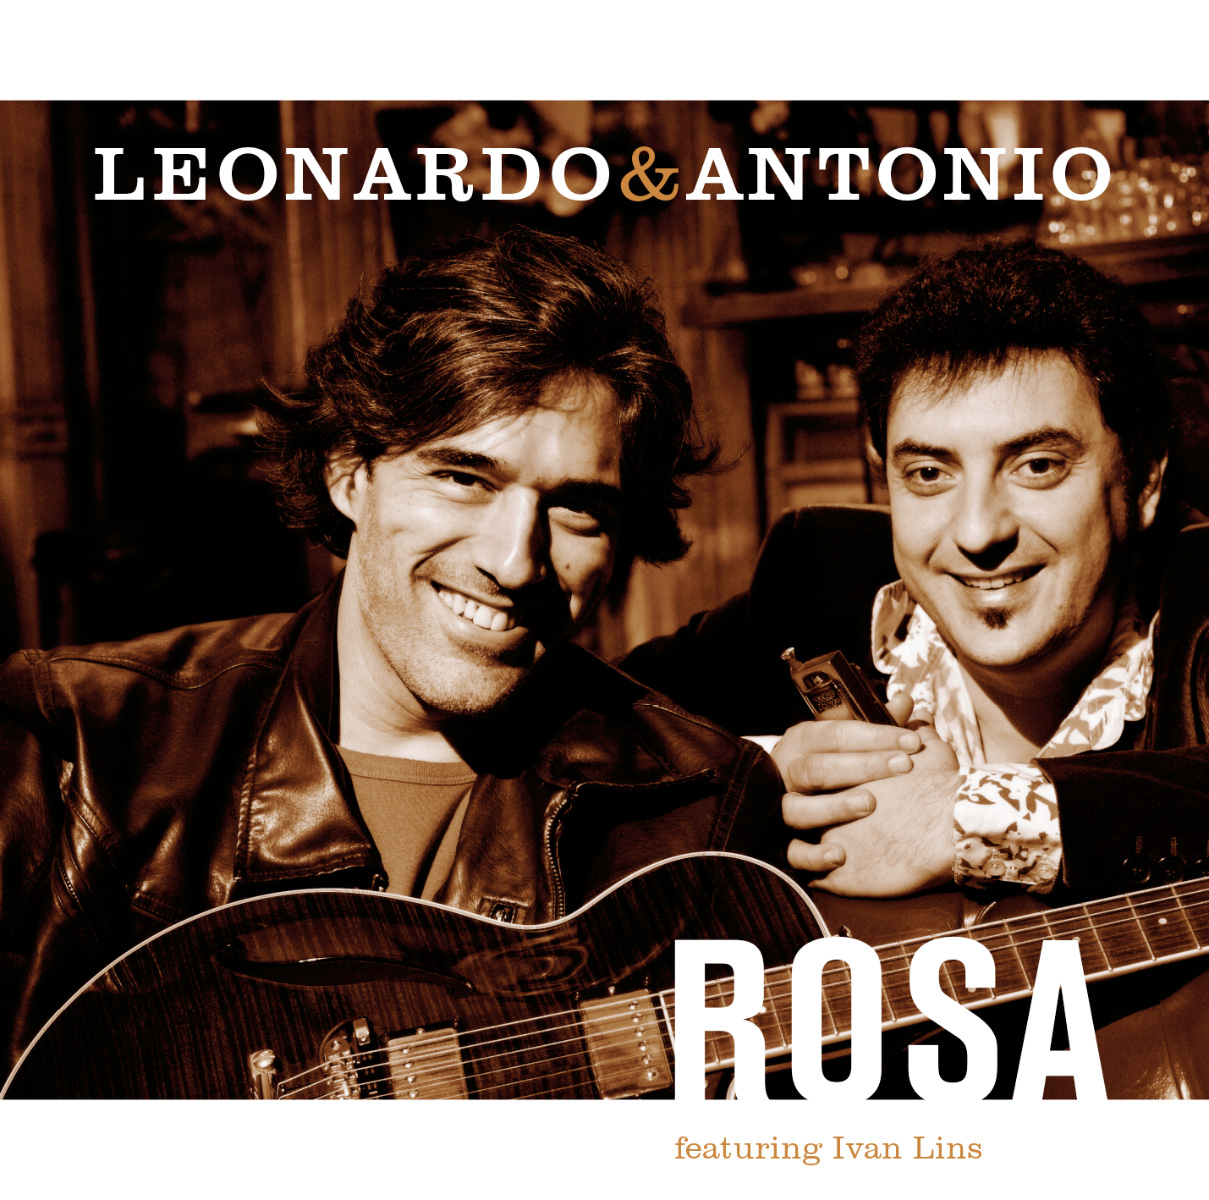  Leonardo & Antonio for Sony Music 